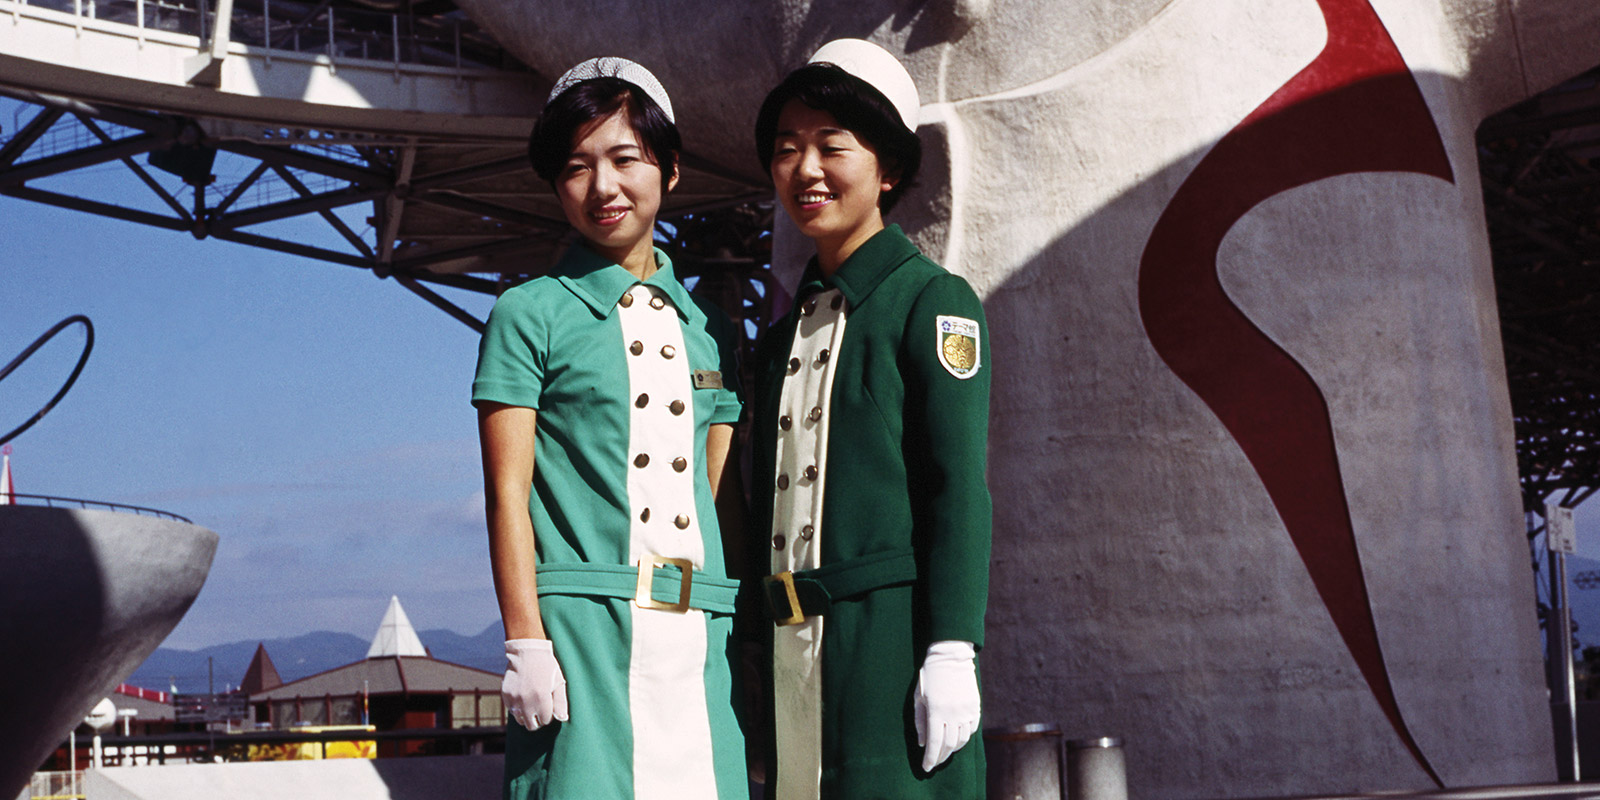 Expo staff in uniform | image courtesy: Osaka Prefectural Government